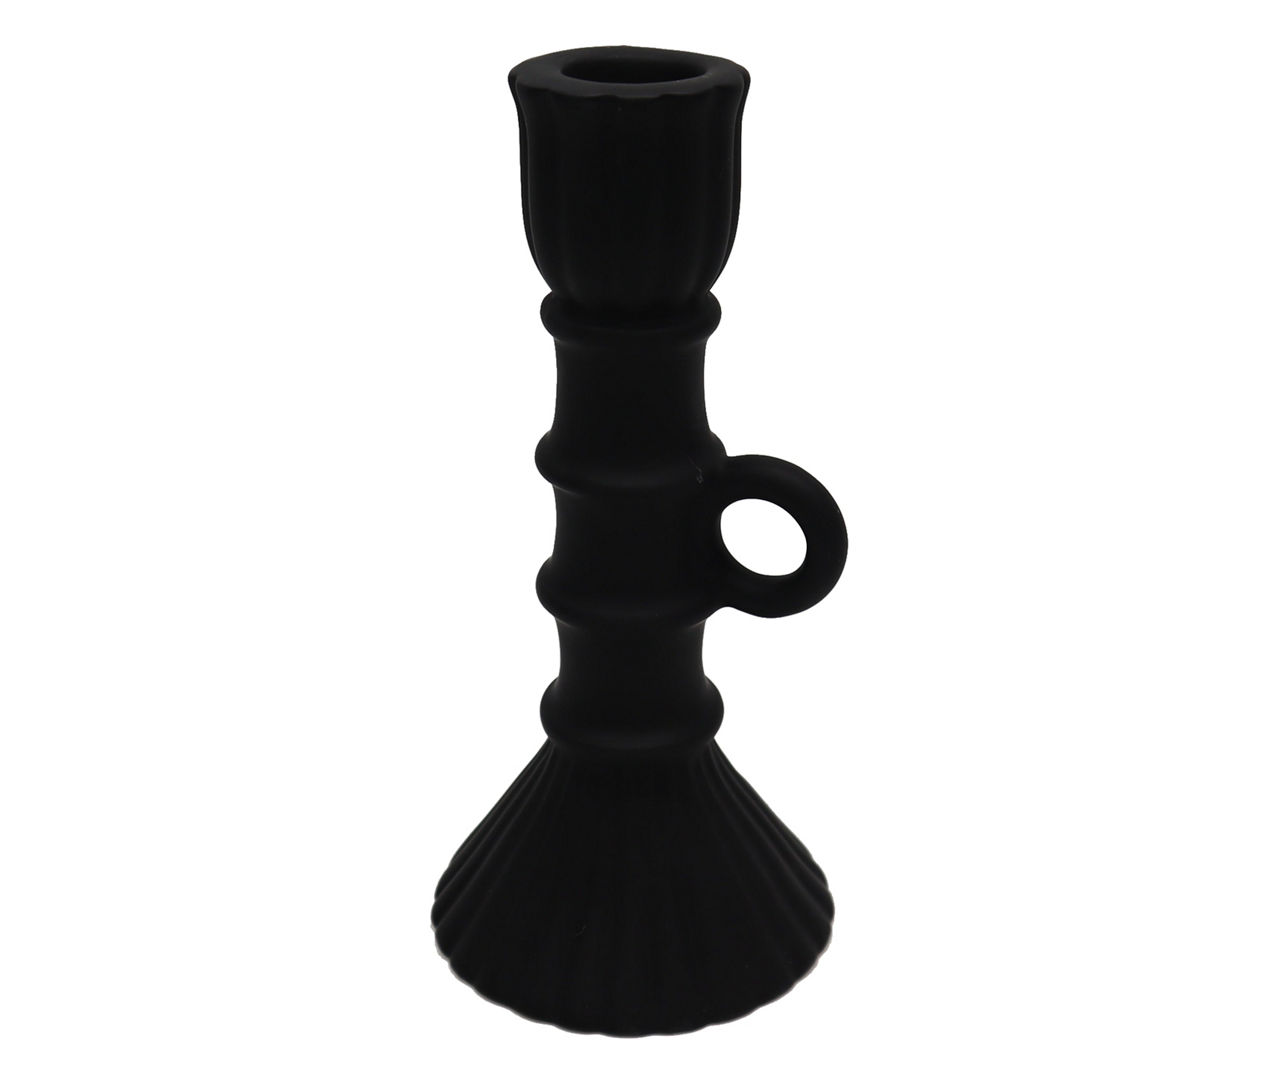 Homeward Black Ceramic Taper Candle Holder, (7")